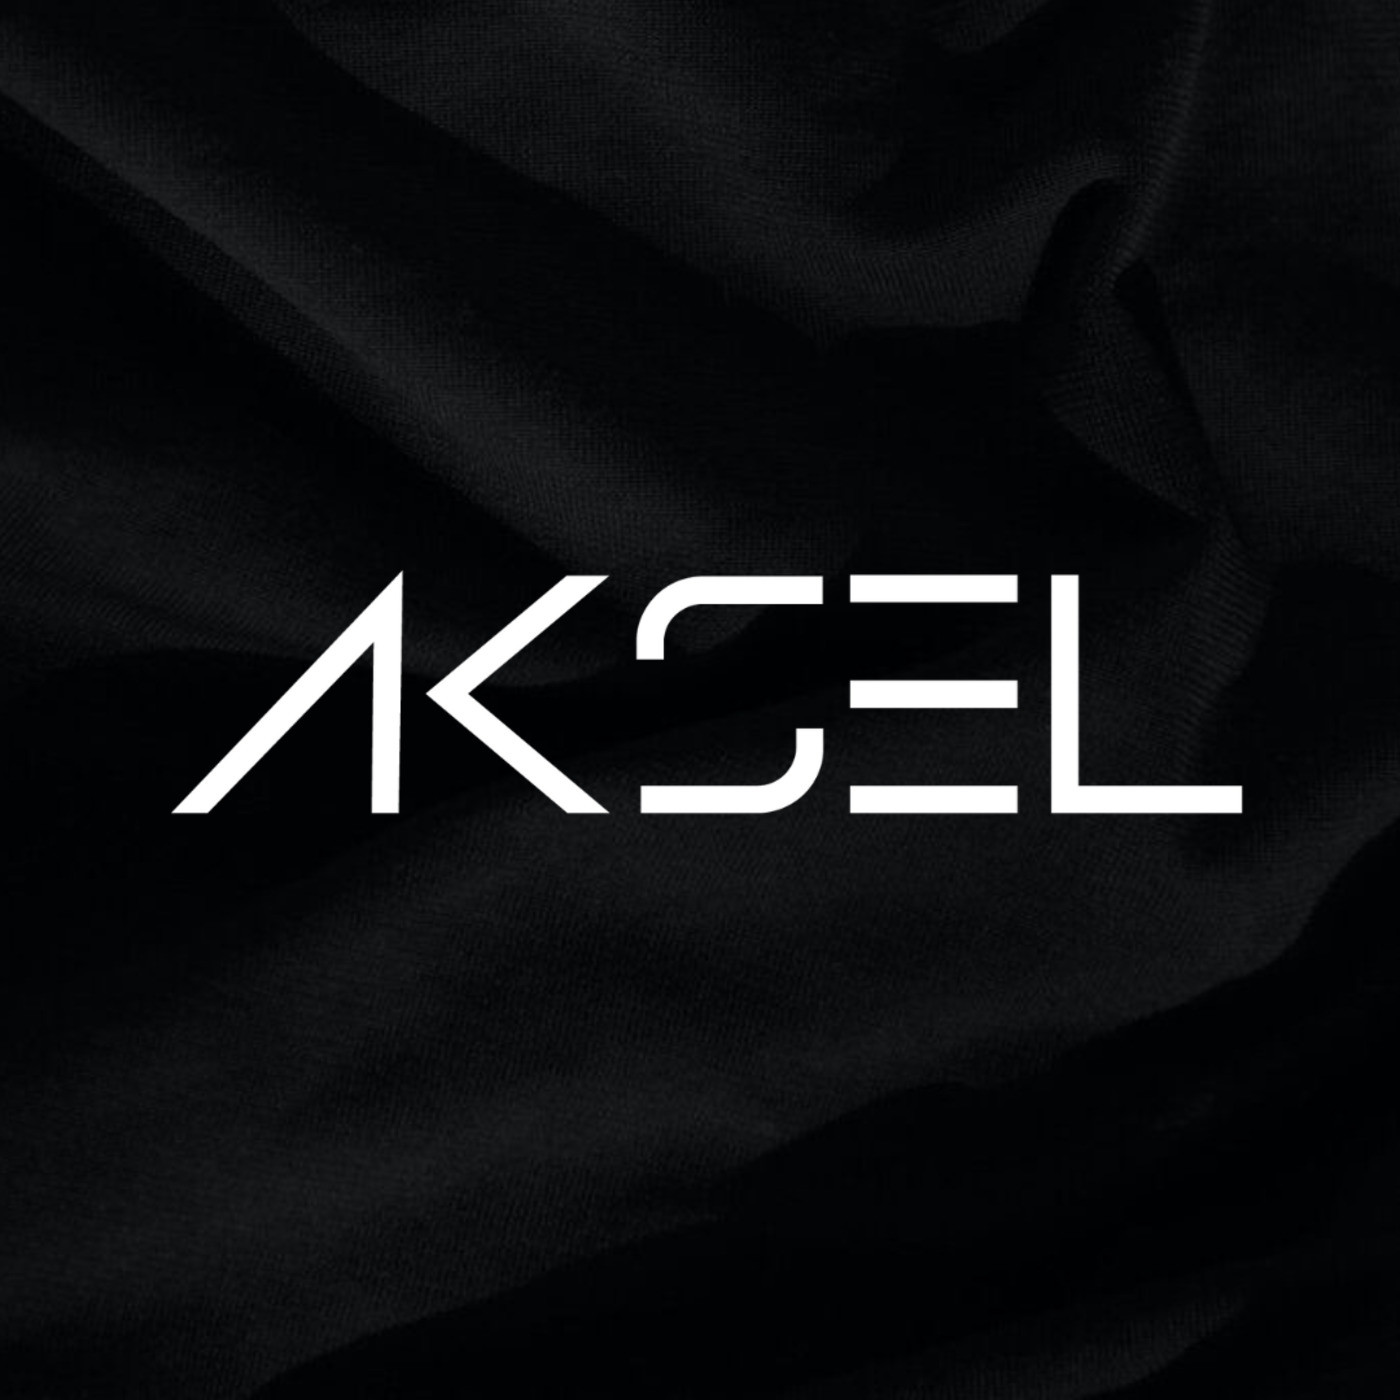 AKSEL - Special Mix for DiscotekaSpb #6